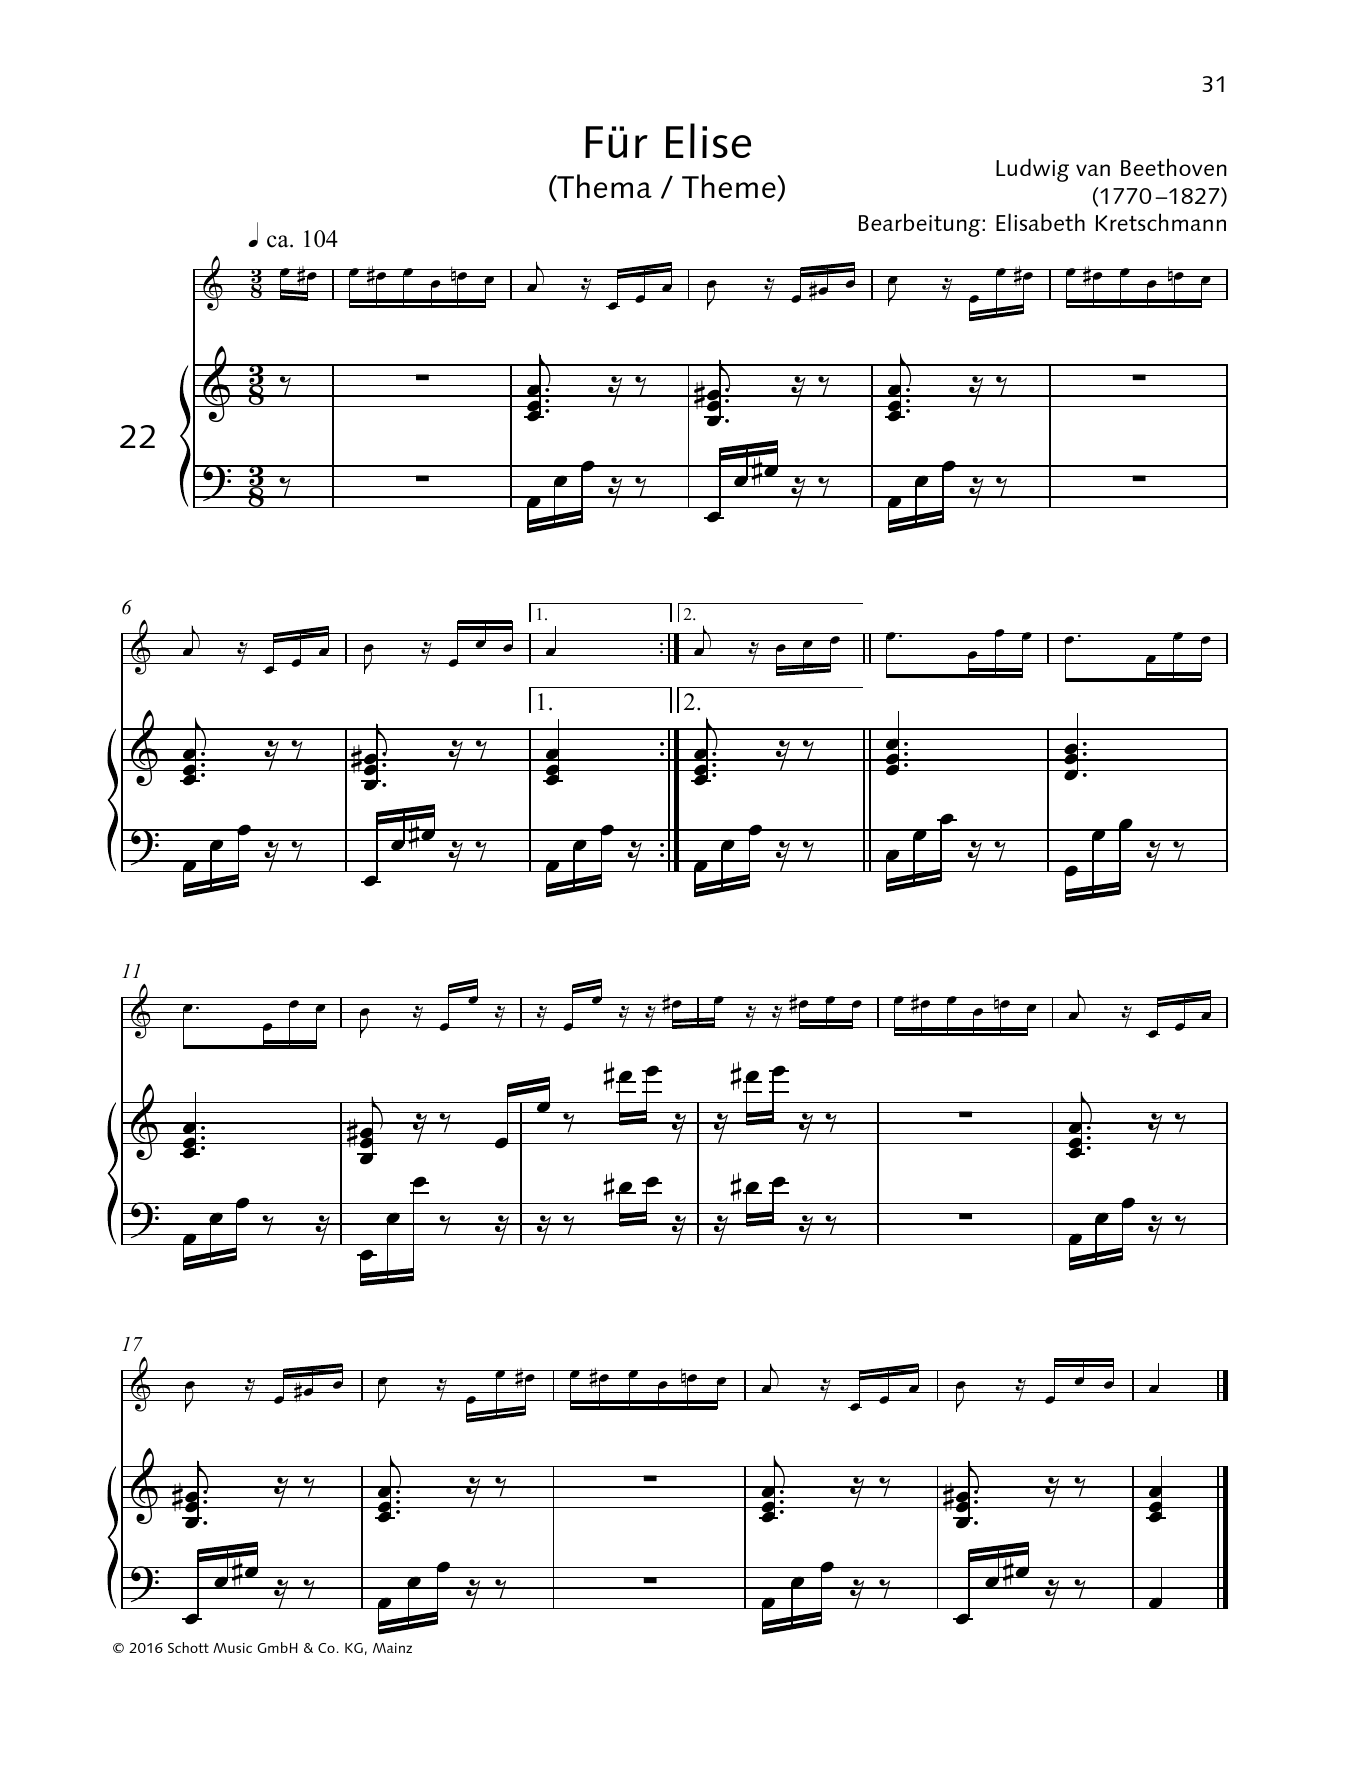 Elisabeth Kretschmann Fur Elise Sheet Music Notes & Chords for Woodwind Solo - Download or Print PDF